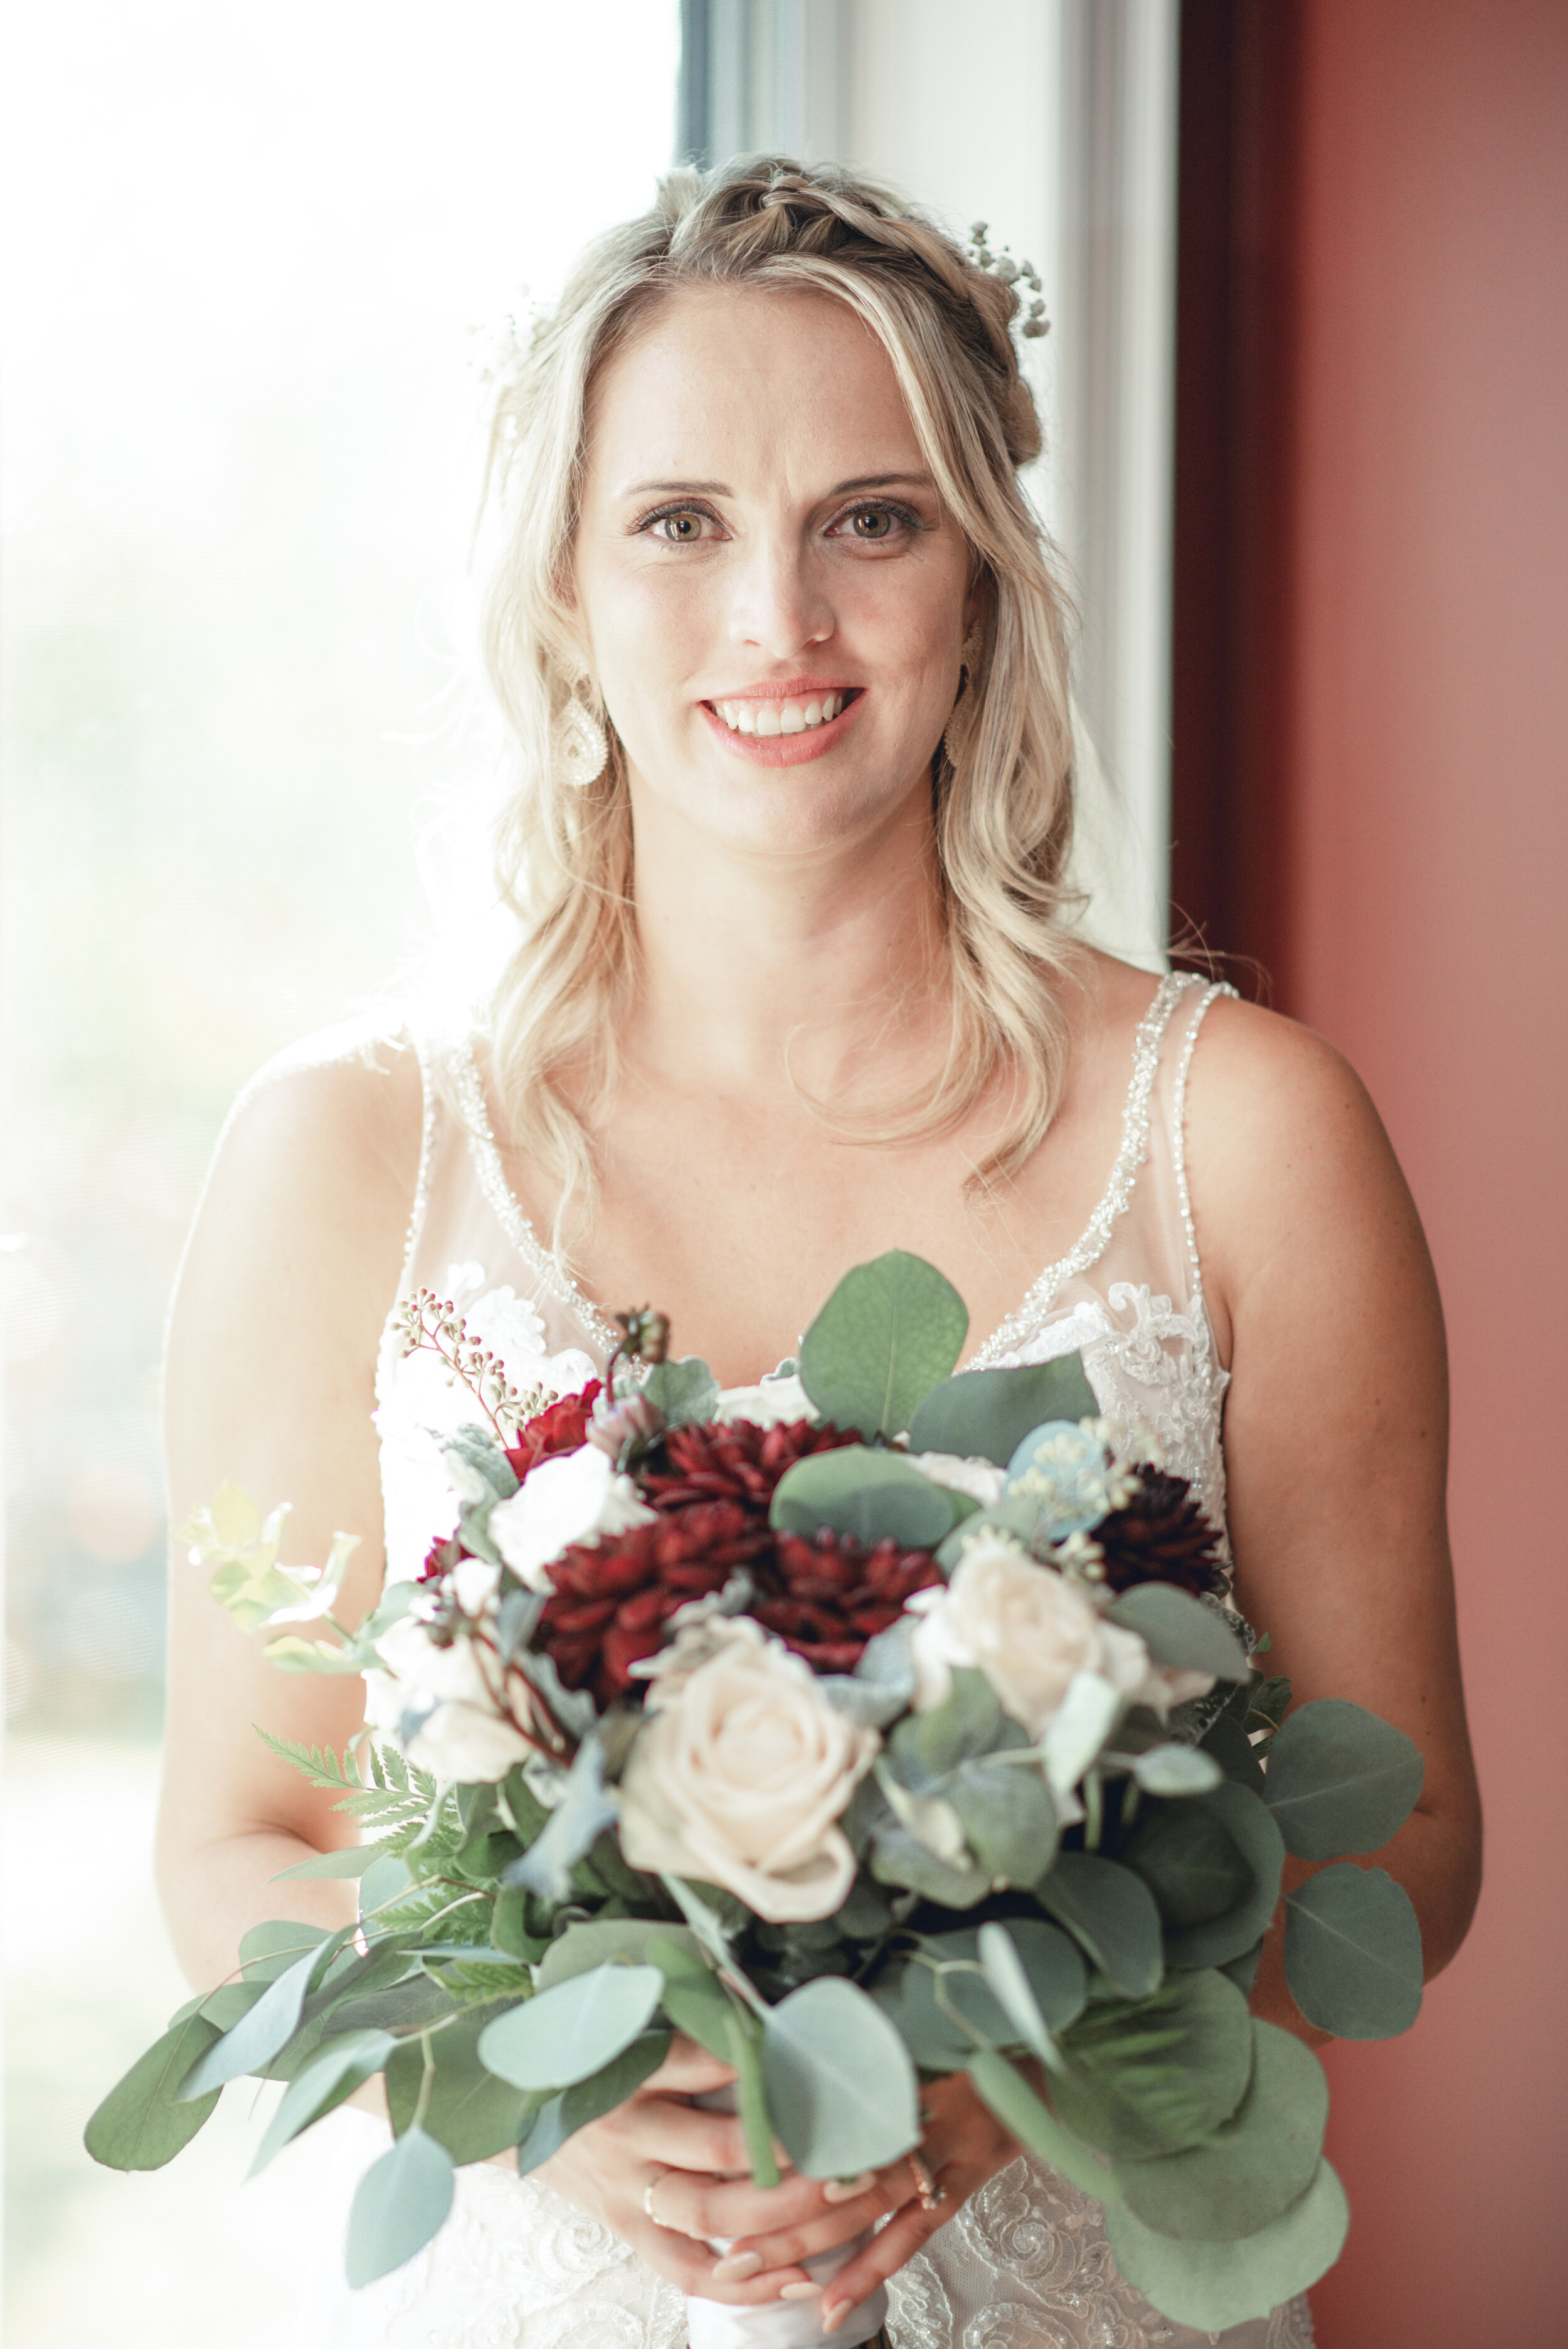 Bride with bouquet - eTangPhotography.com